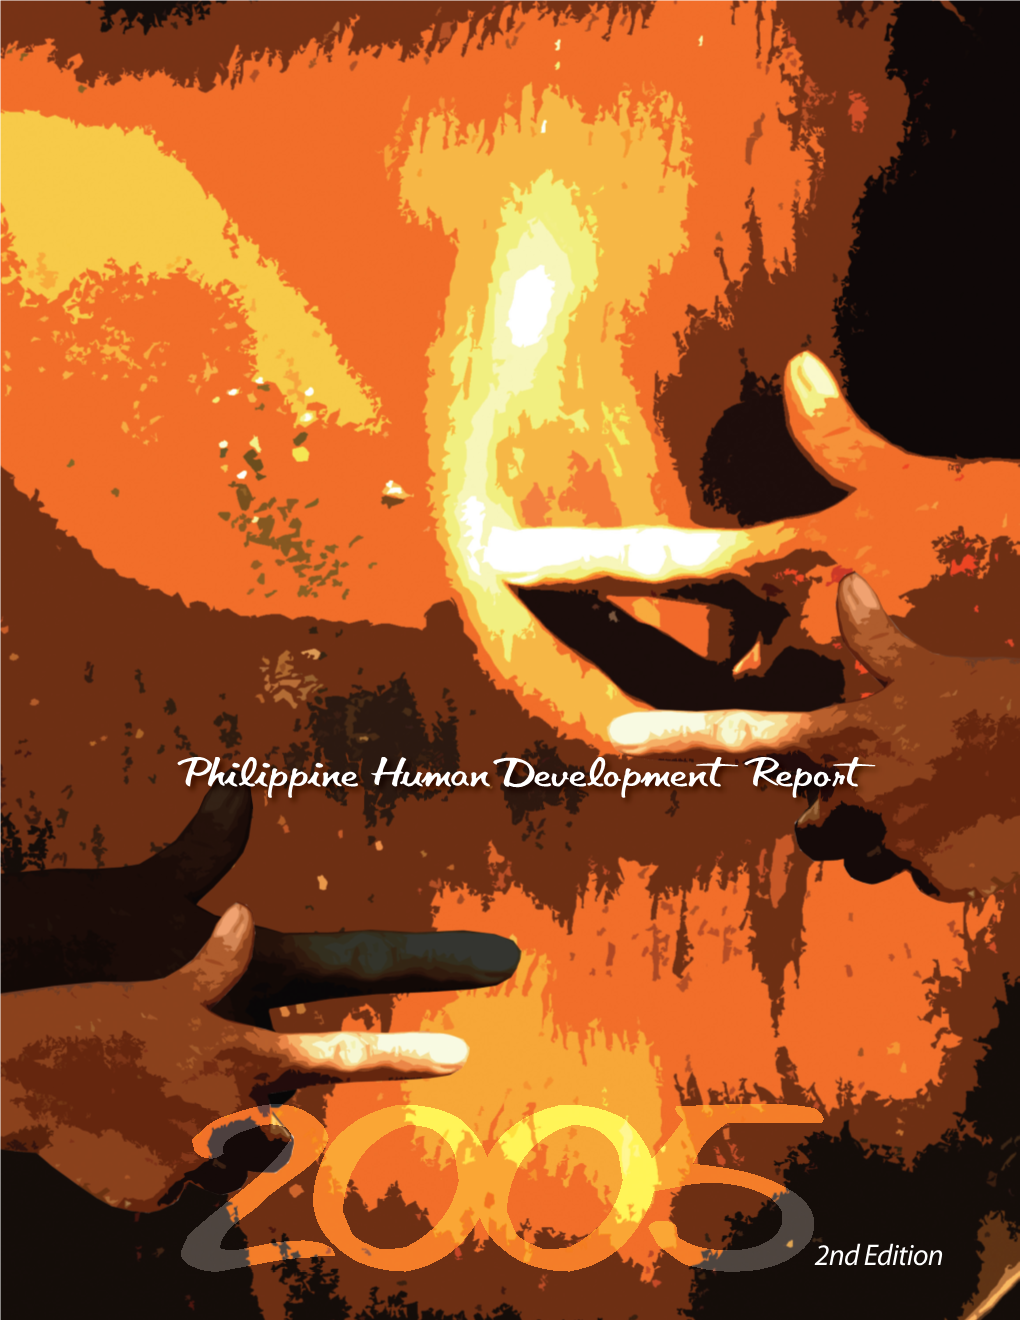 2005 Philippine Human Development Report